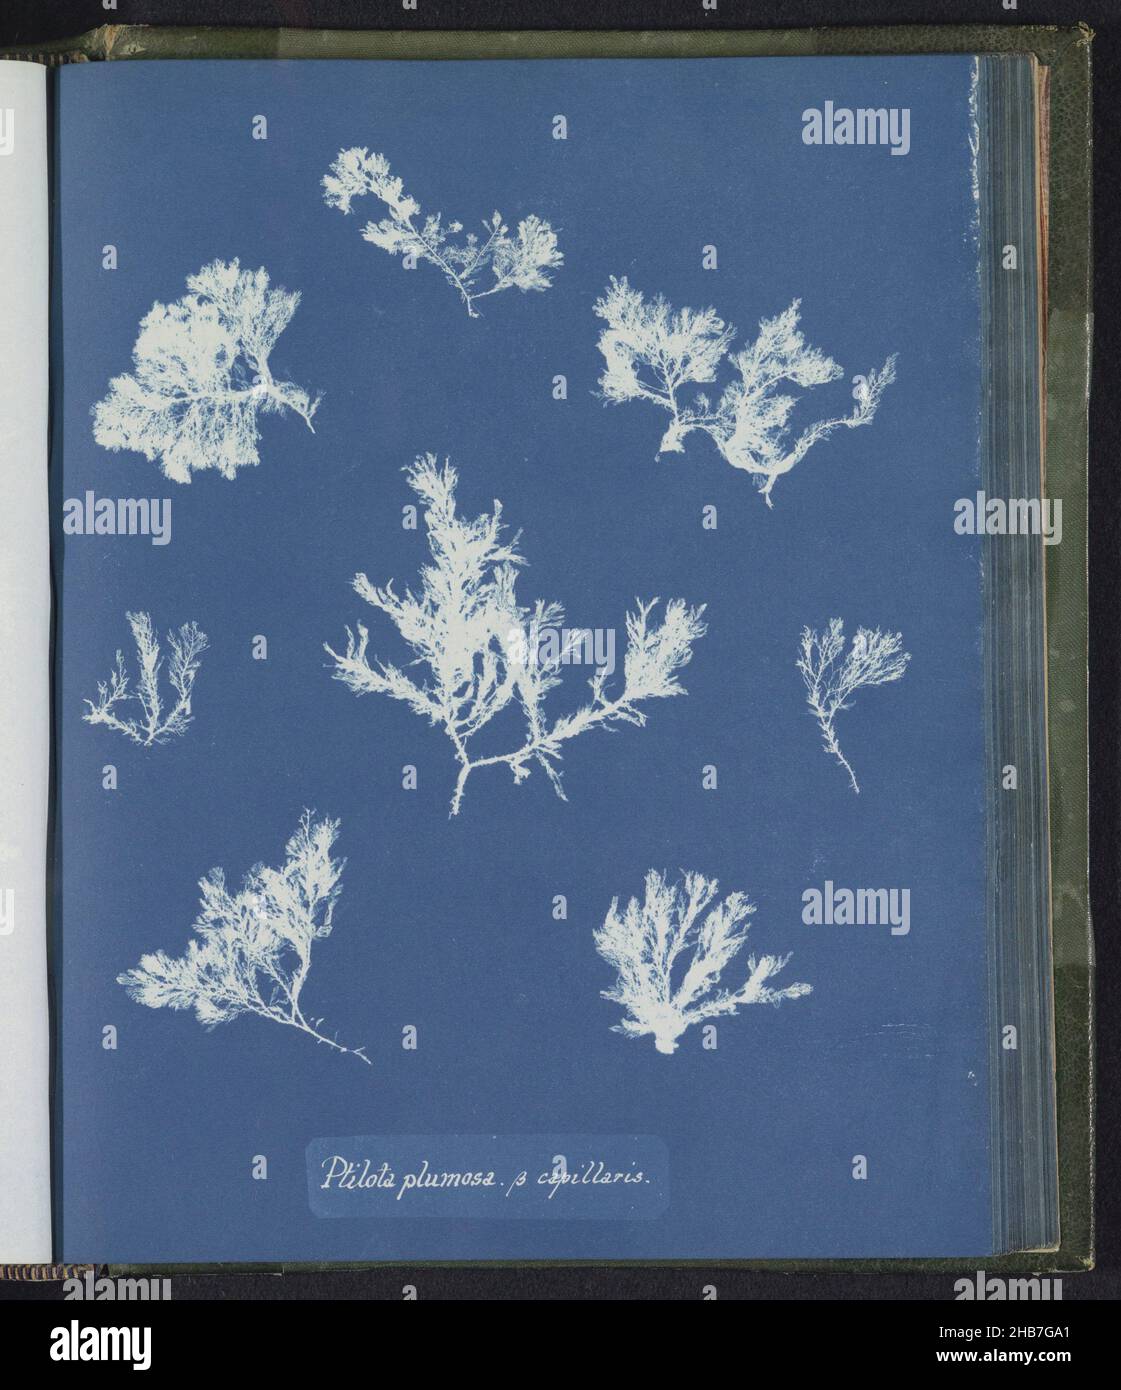 Ptilota plumosa B capillaris, Anna Atkins, United Kingdom, c. 1843 - c. 1853, photographic support, cyanotype, height 250 mm × width 200 mm Stock Photo